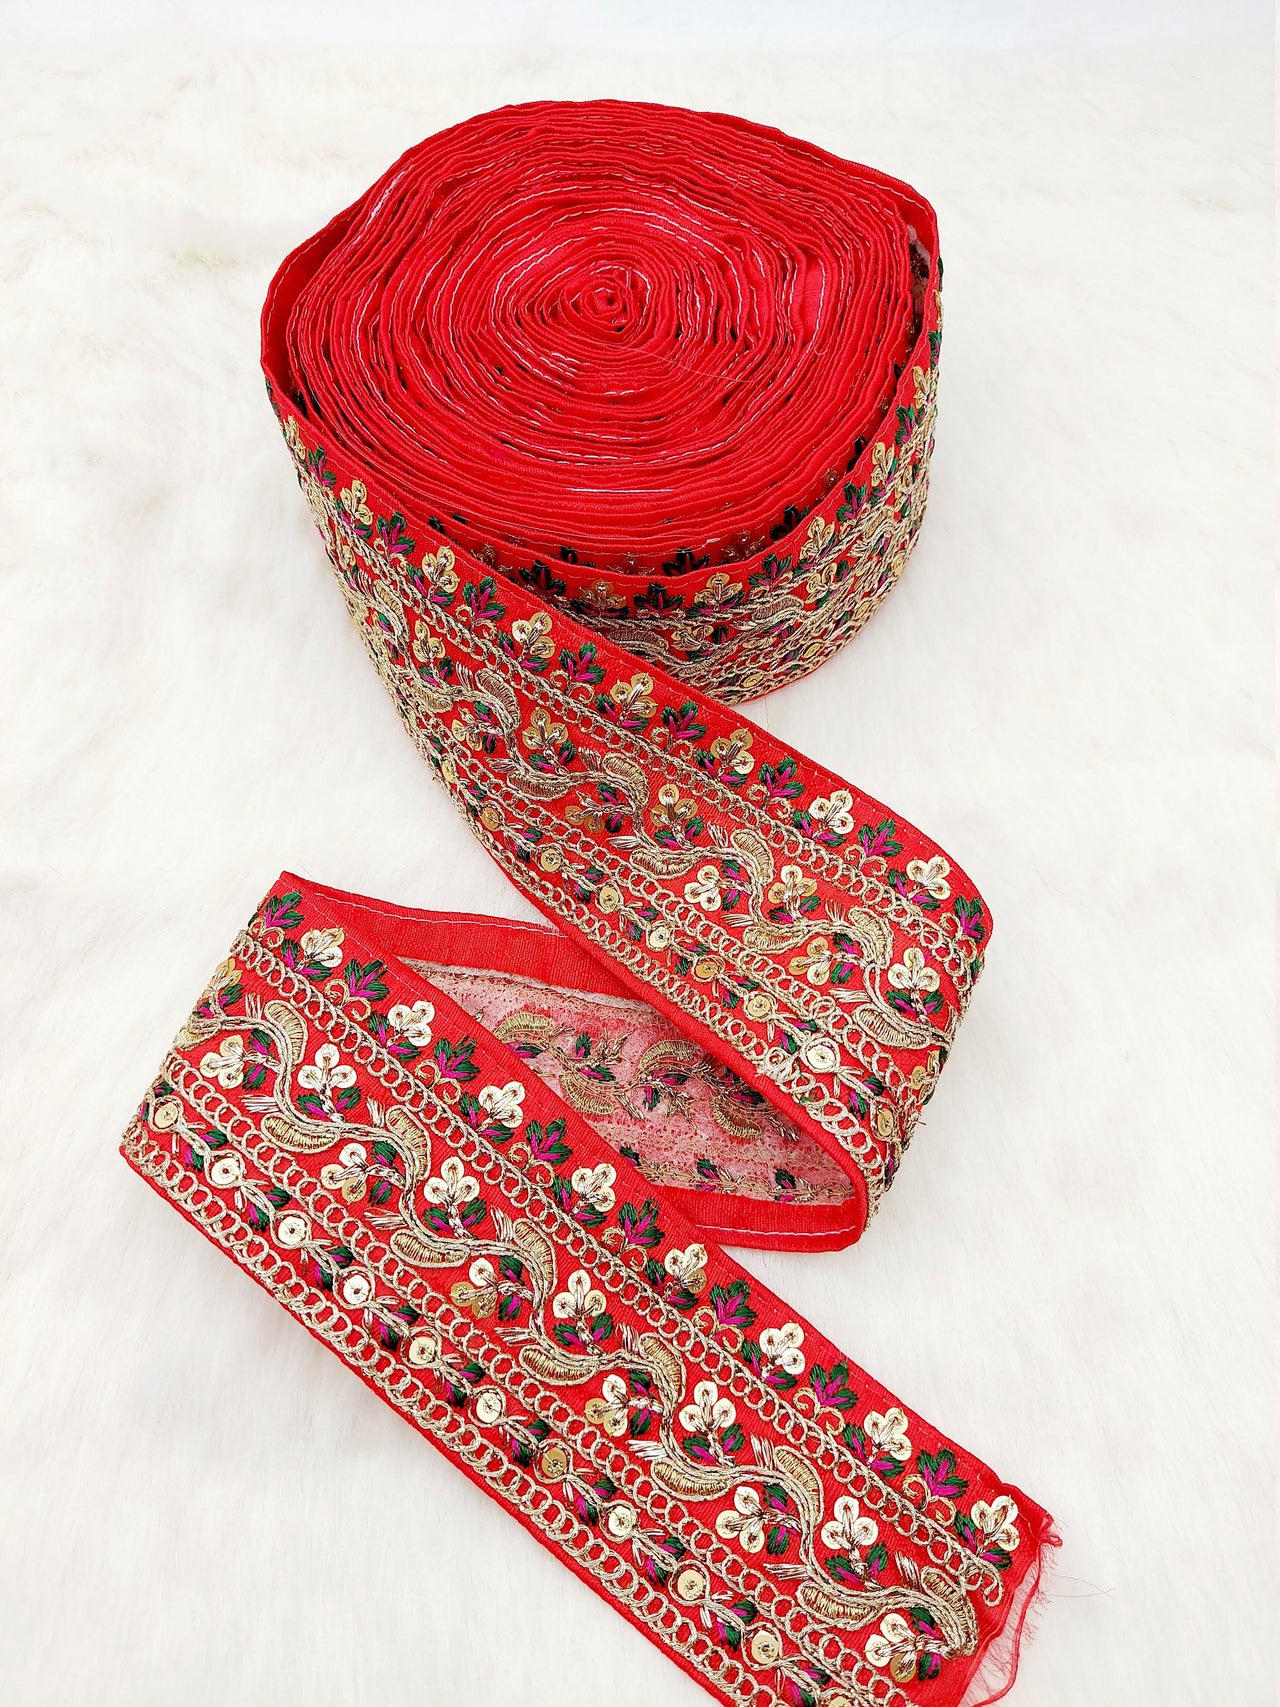 Art Silk Fabric Sari Border Trim with Floral Embroidery and Gold Sequins, Decorative Trim, Indian Sari Border